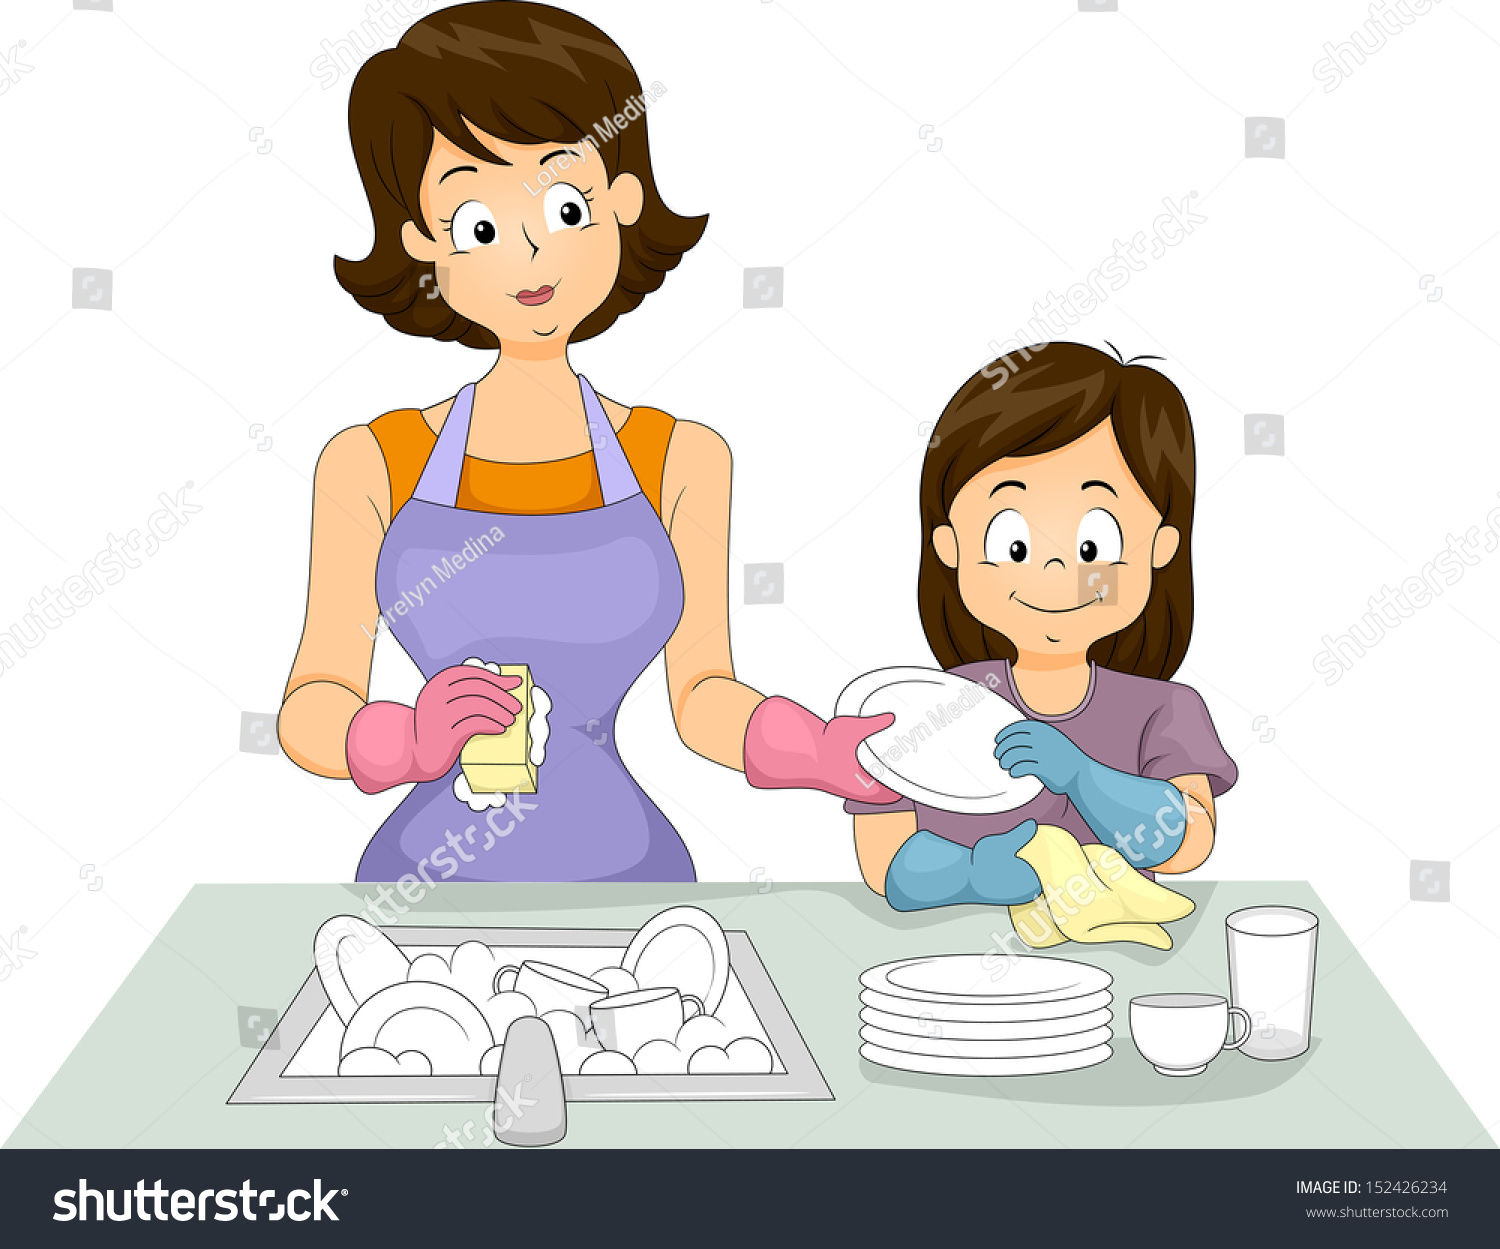 She the dishes already. Картина для детей мама моет посуду. Мама с дочкой моют посуду. Мама моет посуду картинки для детей. Мама вытирает посуду для детей.